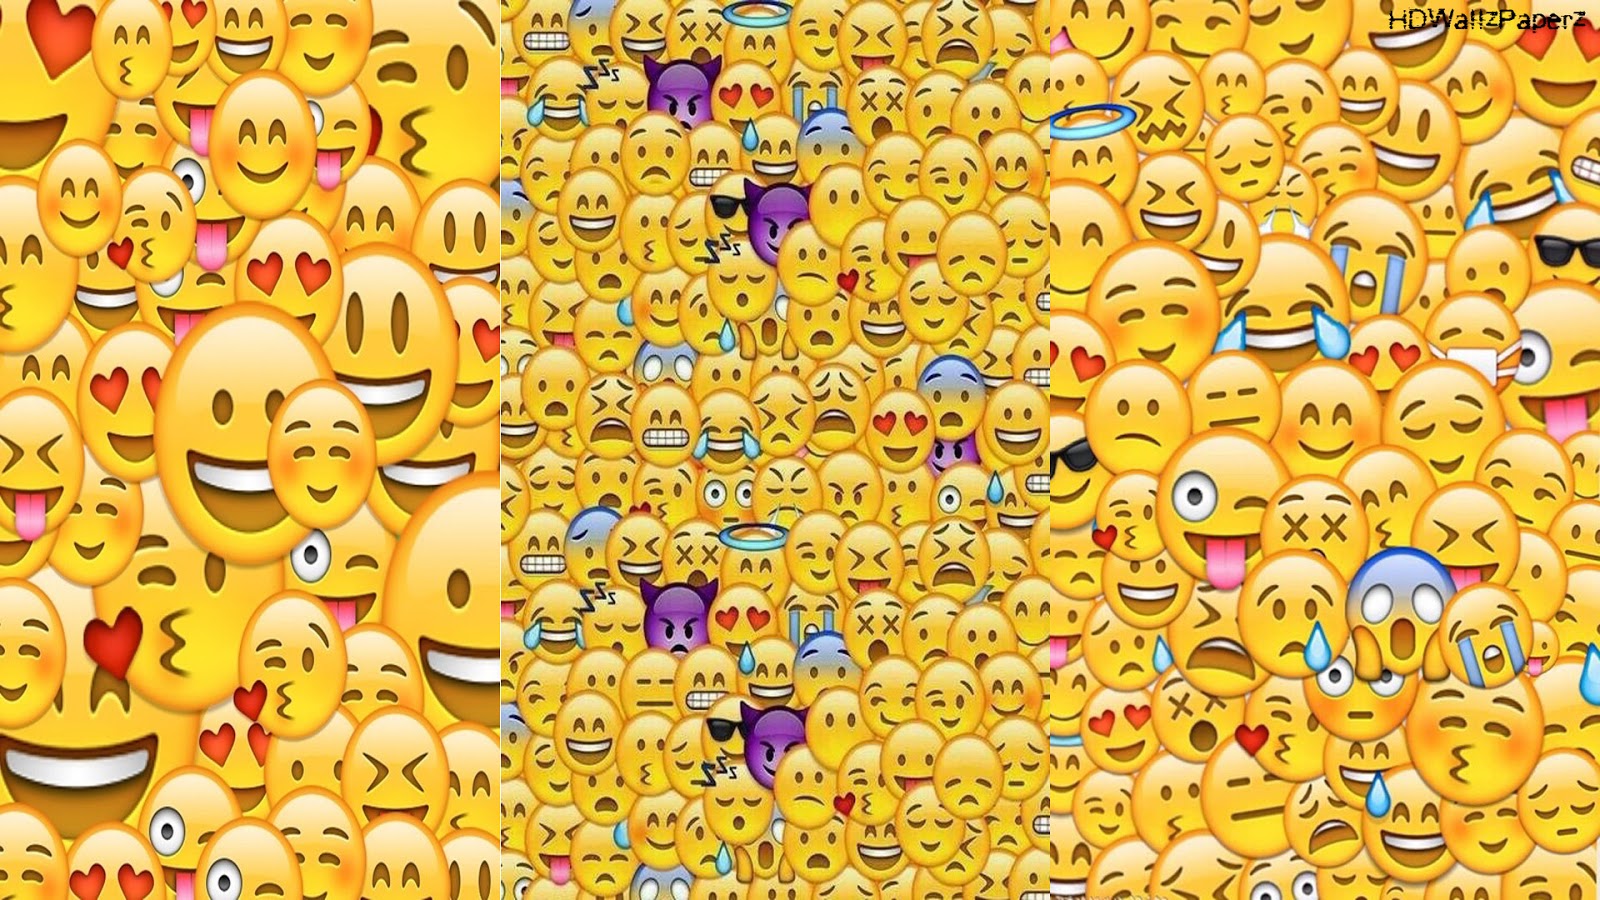 Emoji Faces Wallpapers In Hd Wallpaper - Papel De Parede De Emojis - HD Wallpaper 